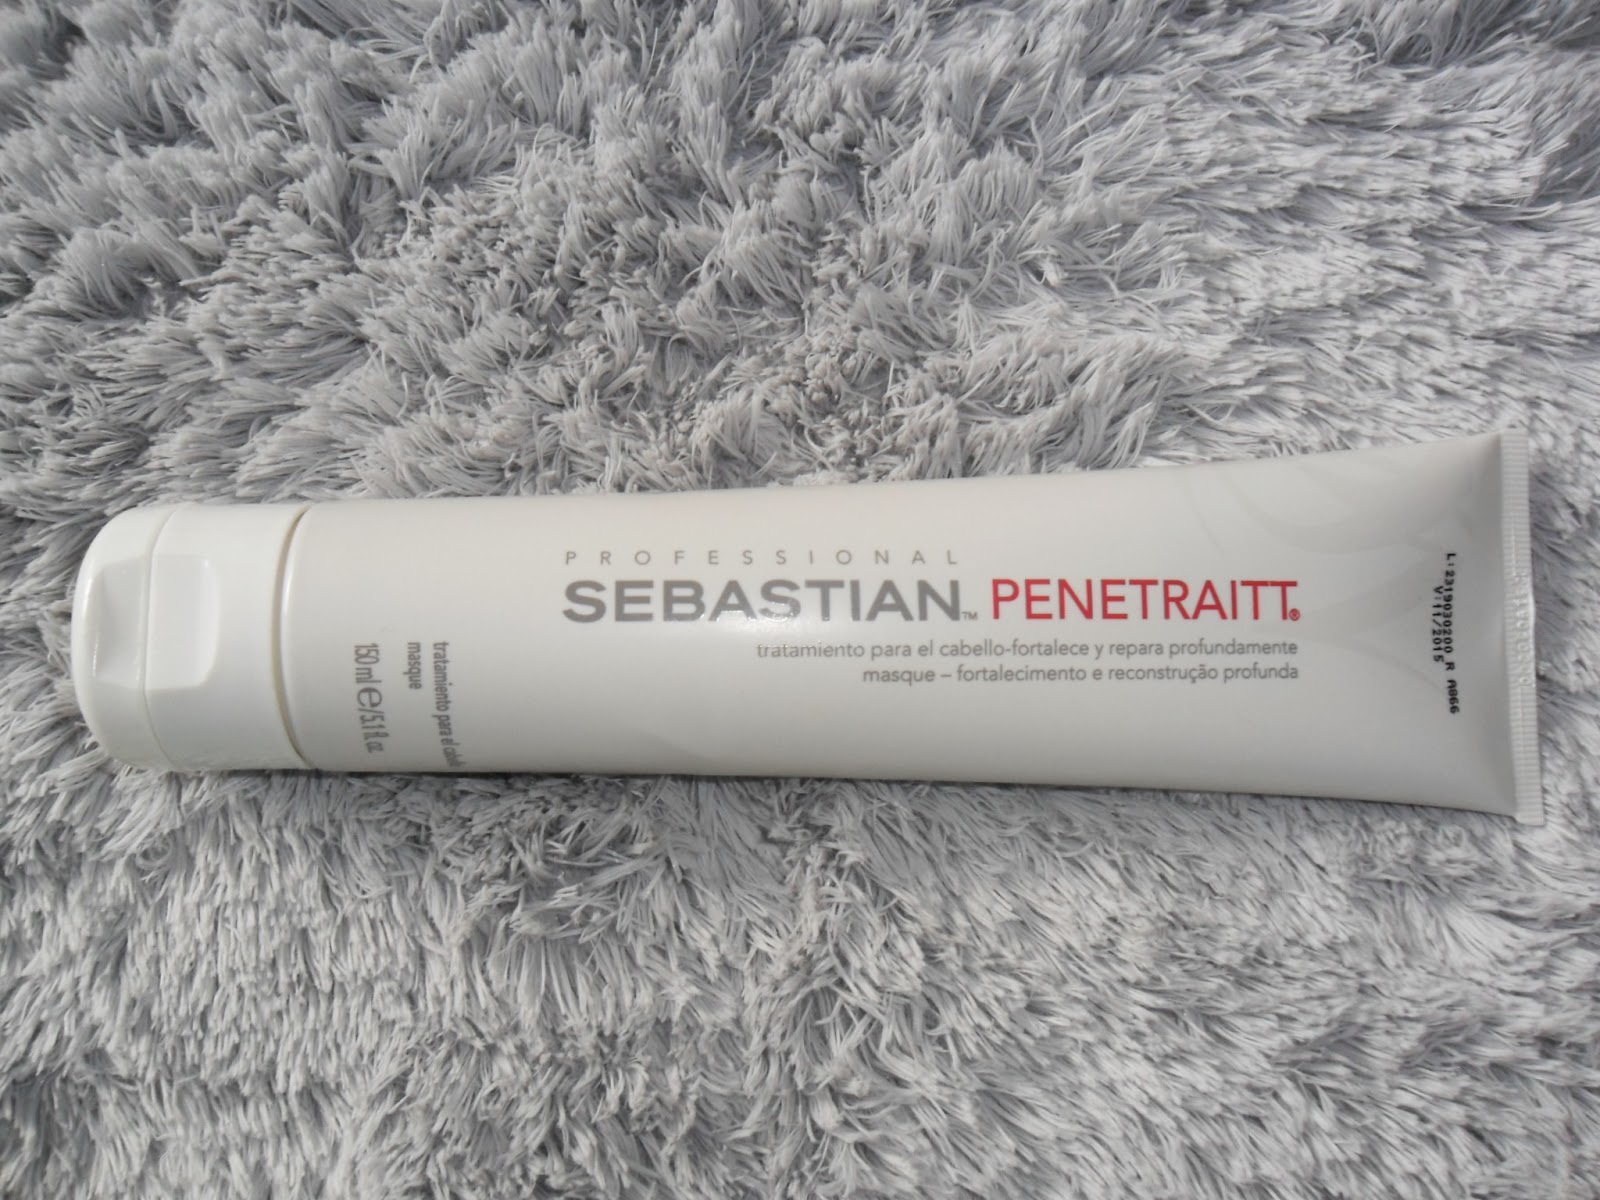 Sebastian Professional Penetraitt Masque. Available at all leading Wella Salons